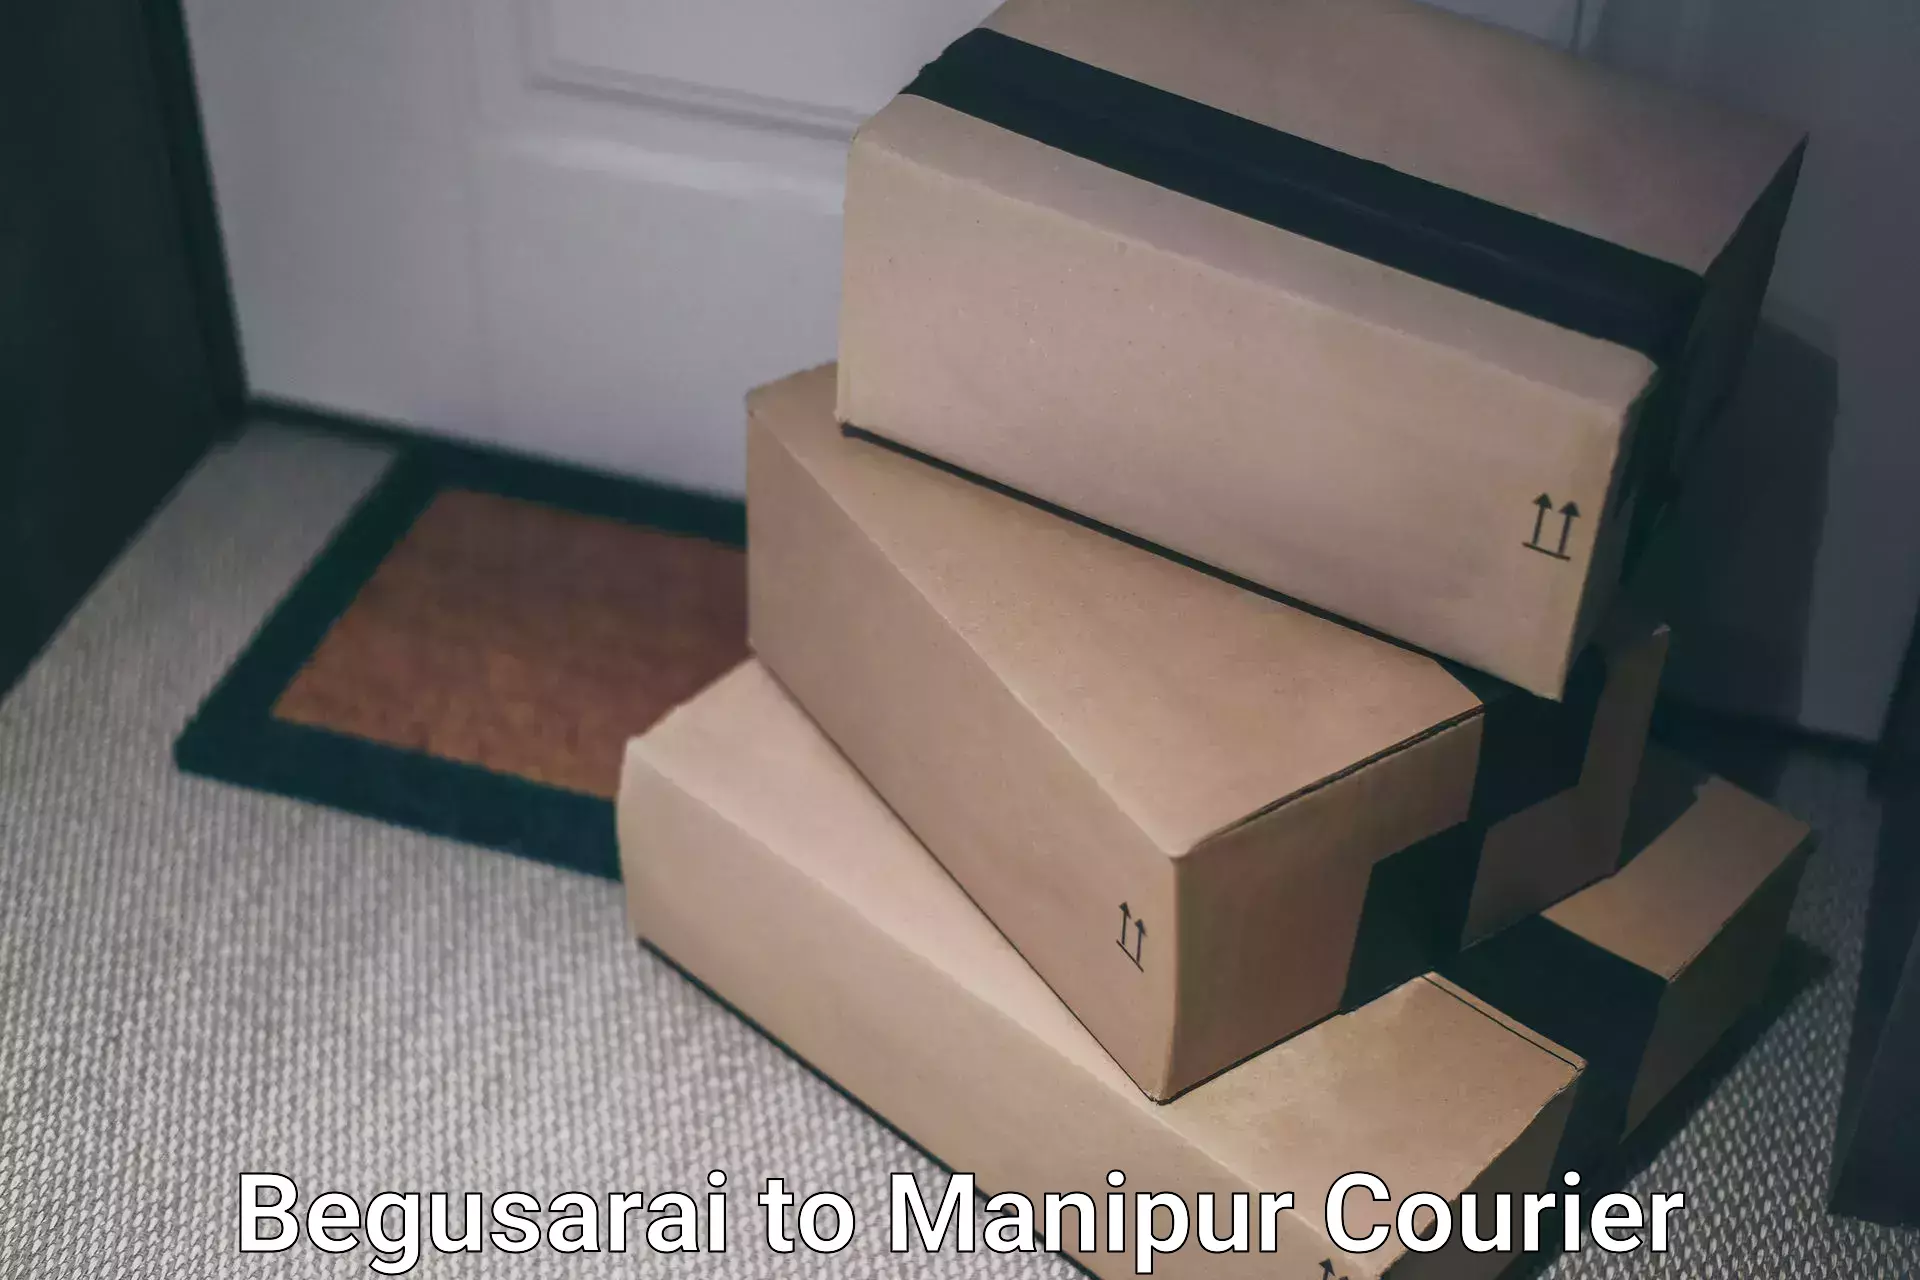 Courier service comparison Begusarai to Manipur